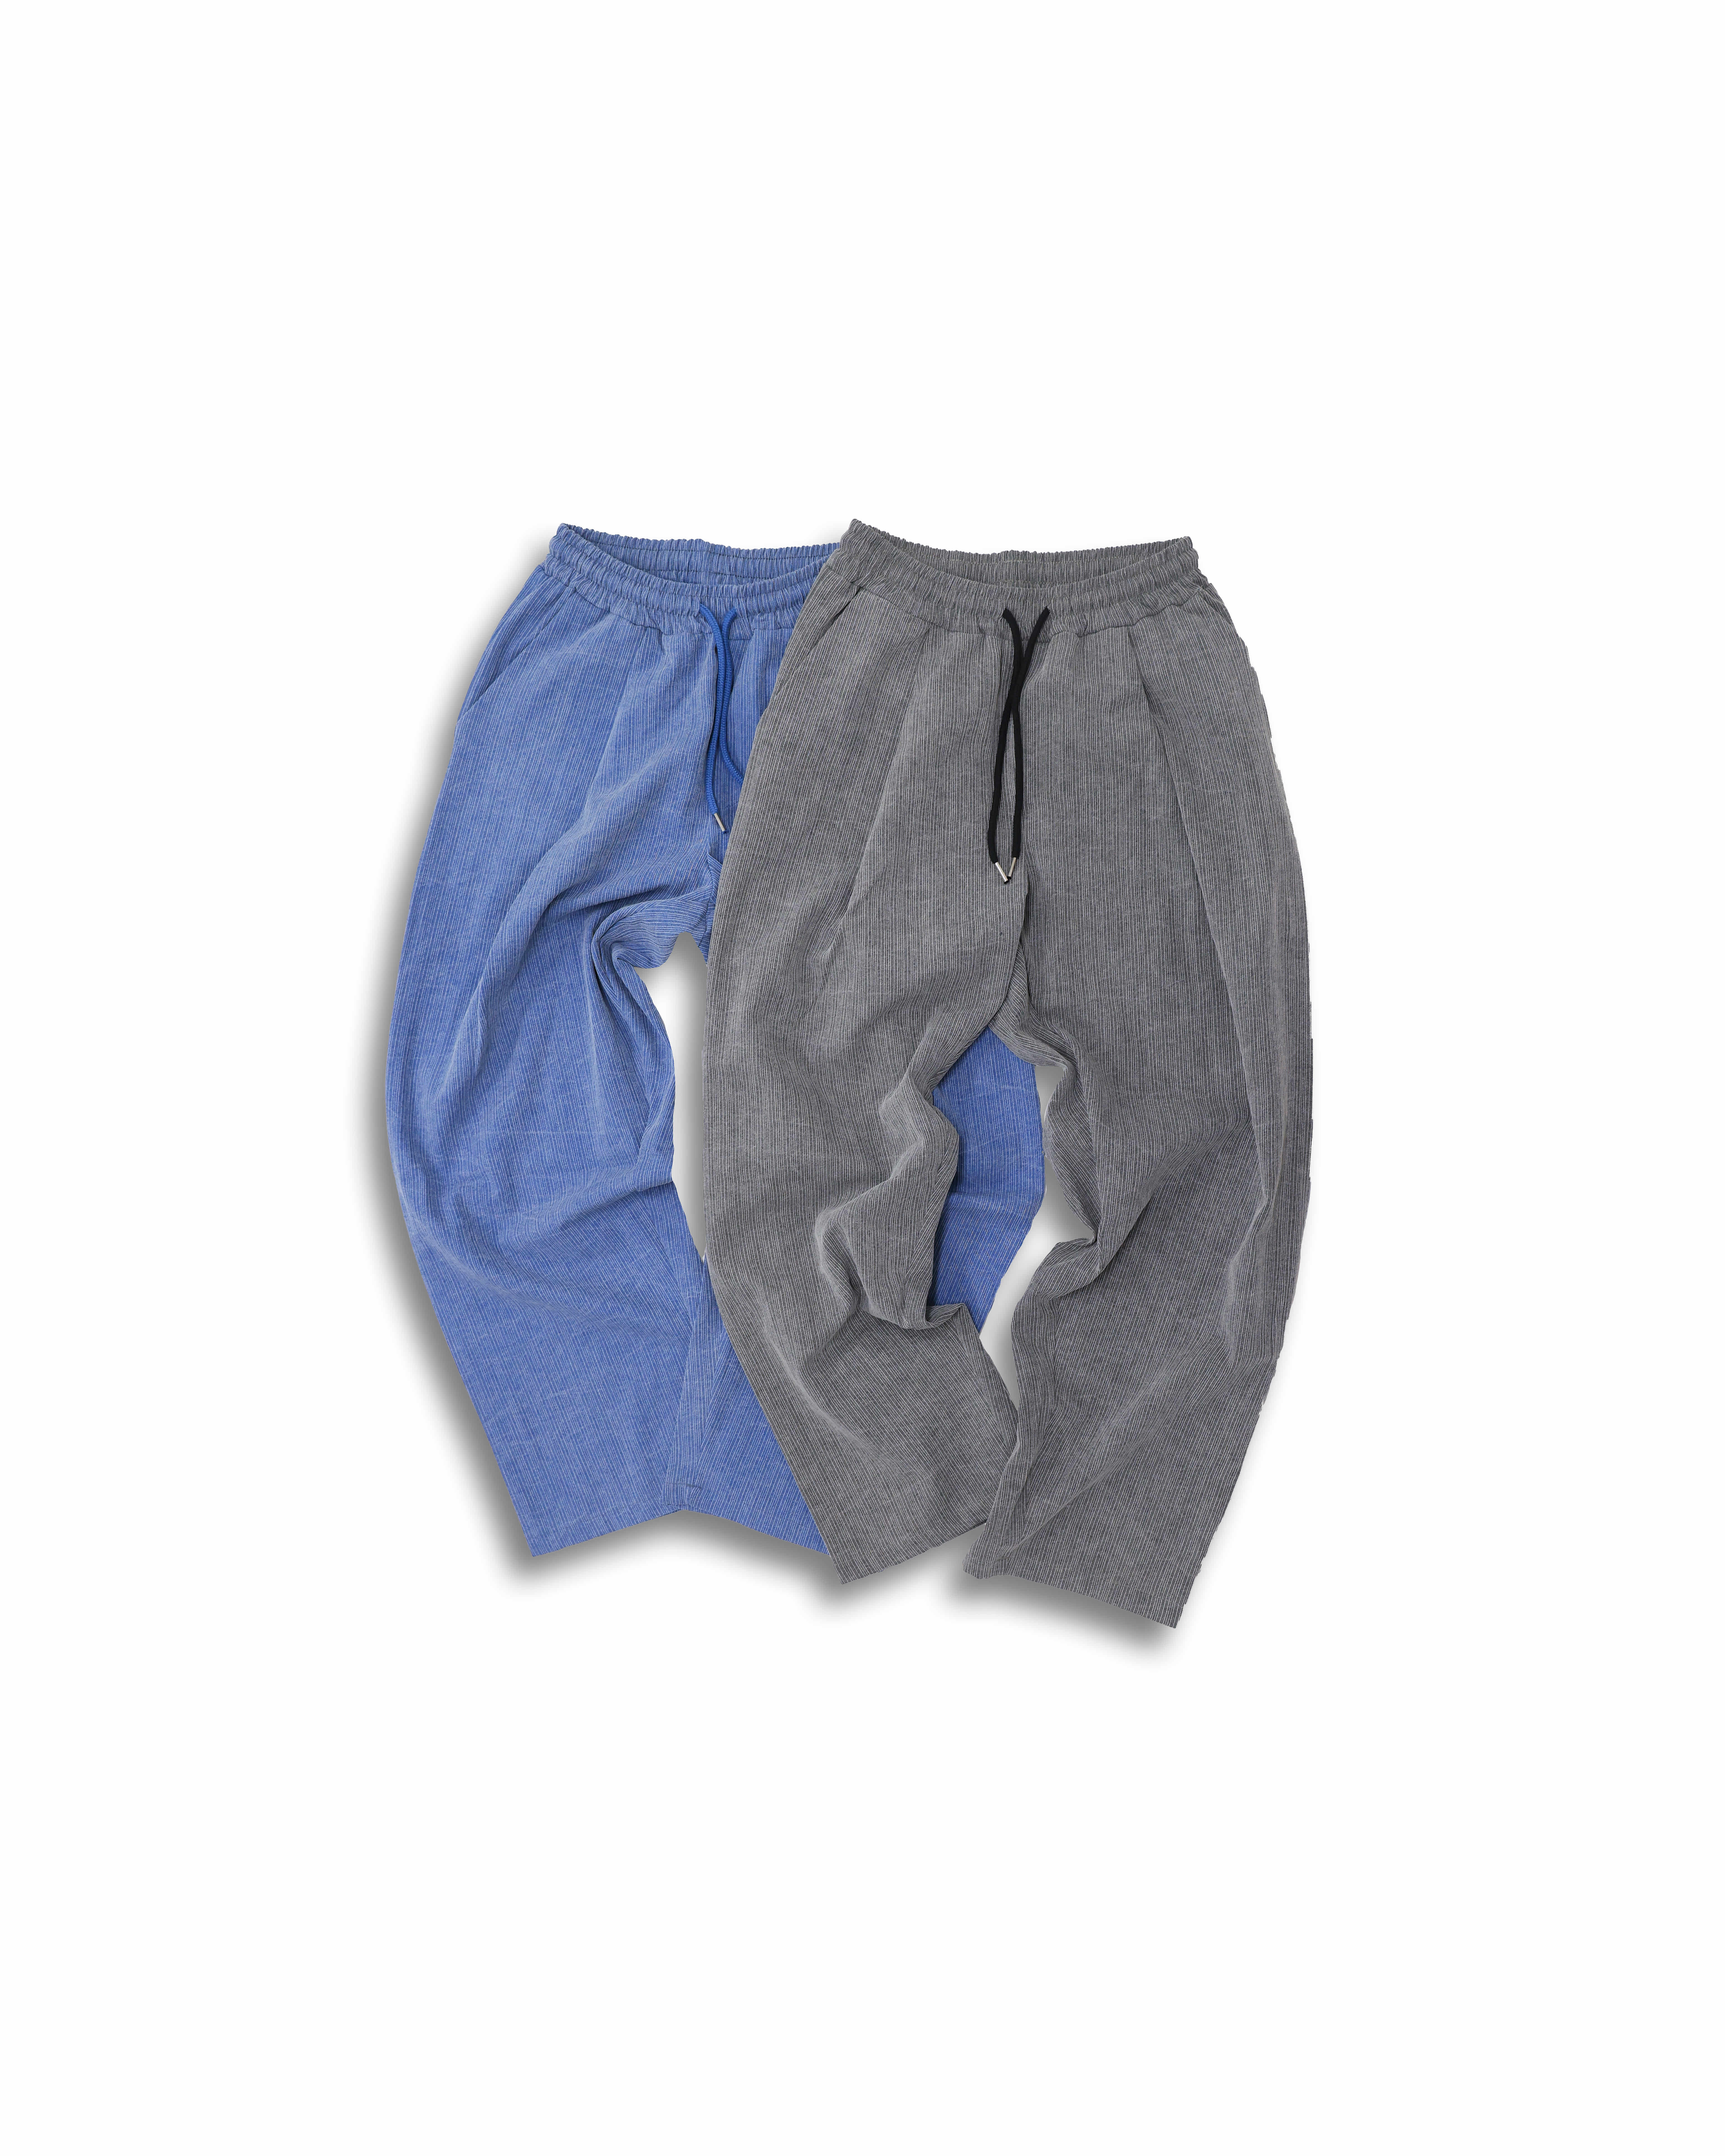 Easy Over Denim Slop Pants (Charcoal/Blue)